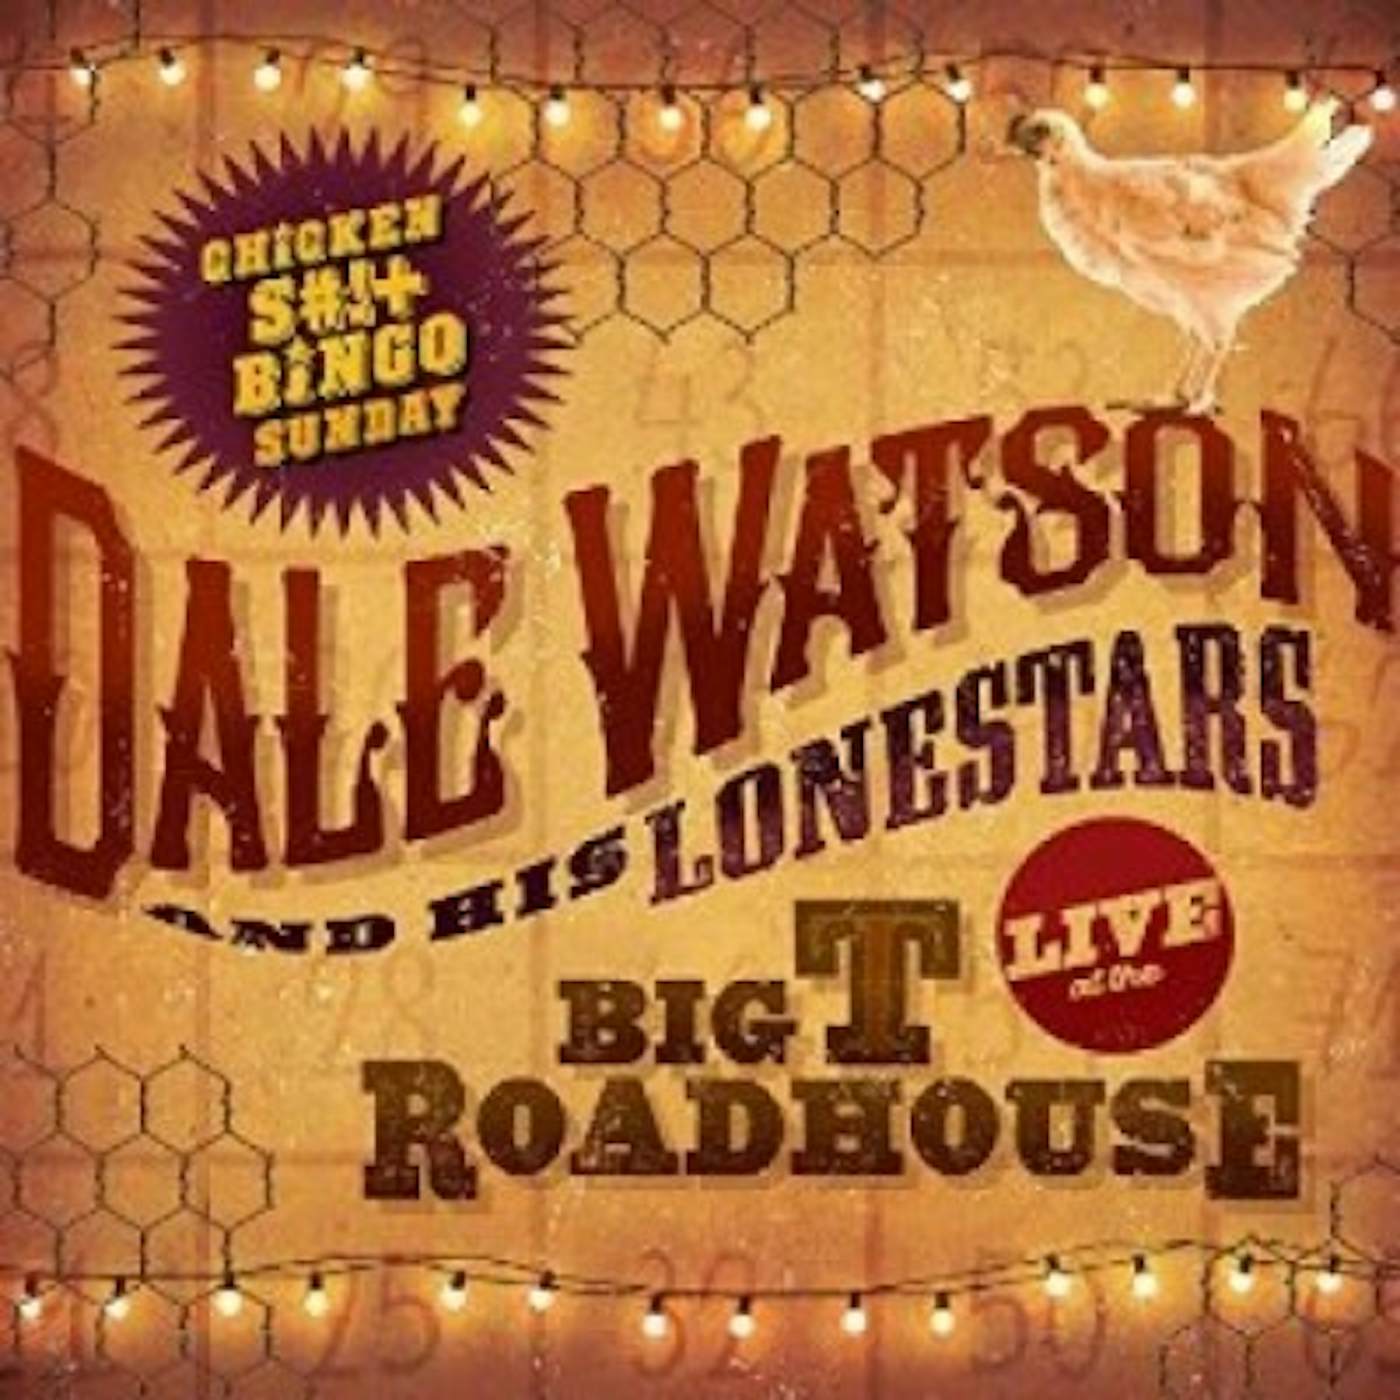 Dale Watson LIVE AT THE BIG T ROADHOUSE -CHICKEN SHIT & BINGO CD